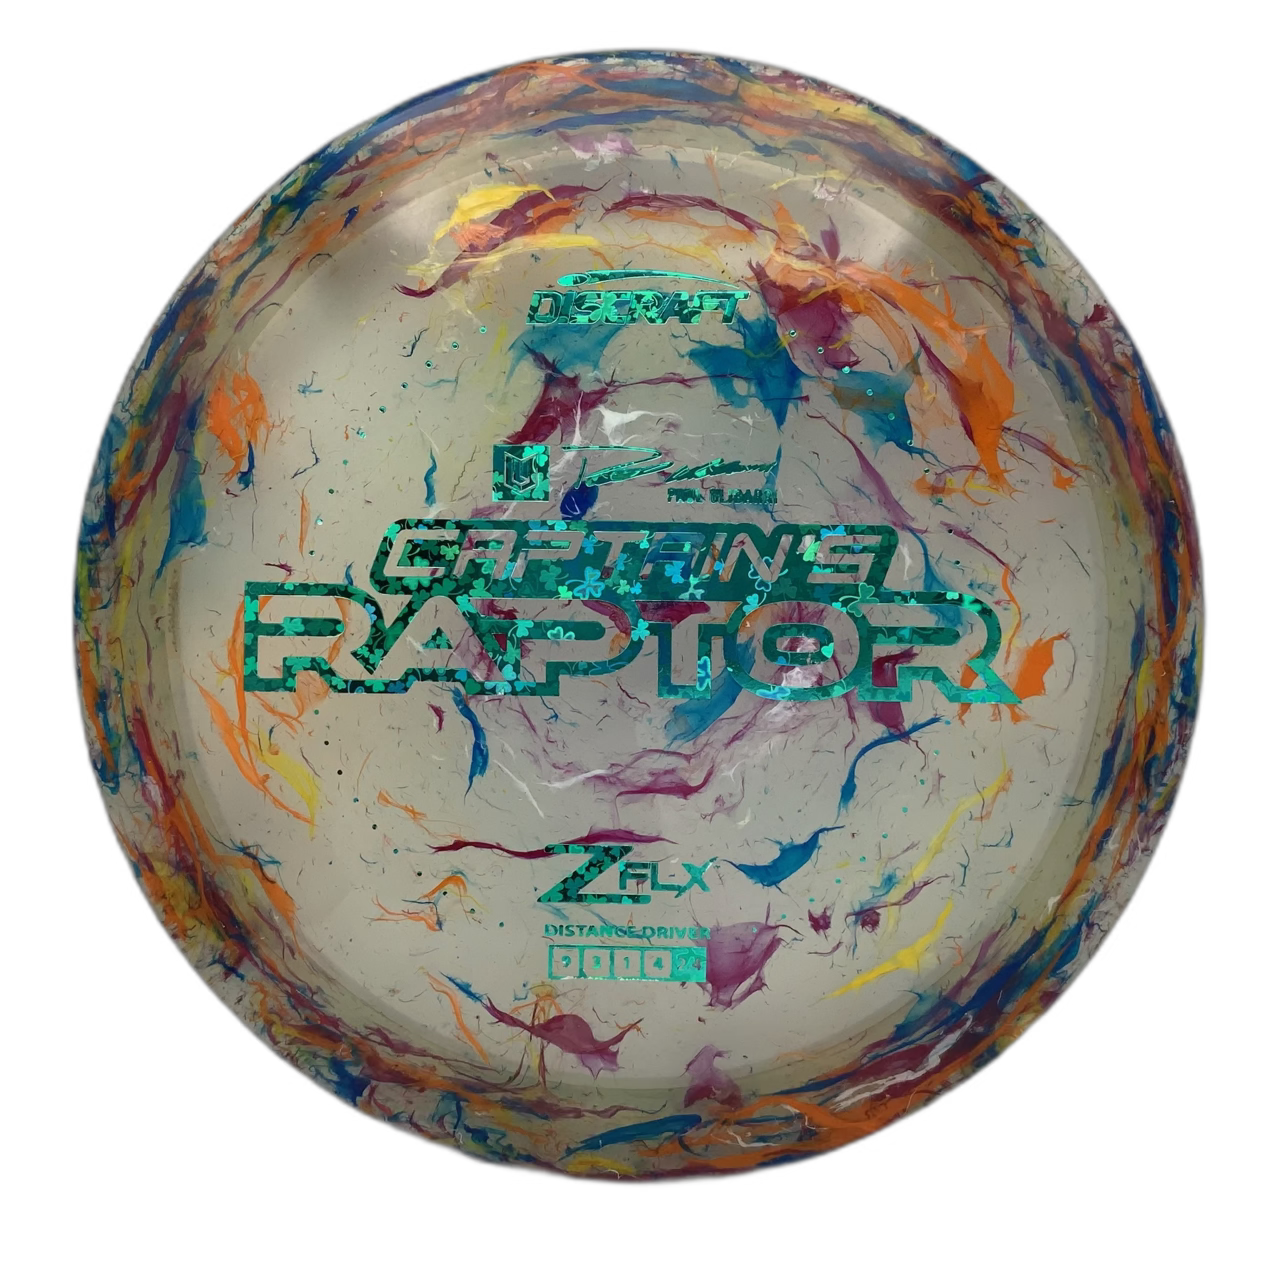 Discraft Captain's Raptor - Astro Discs TX - Houston Disc Golf